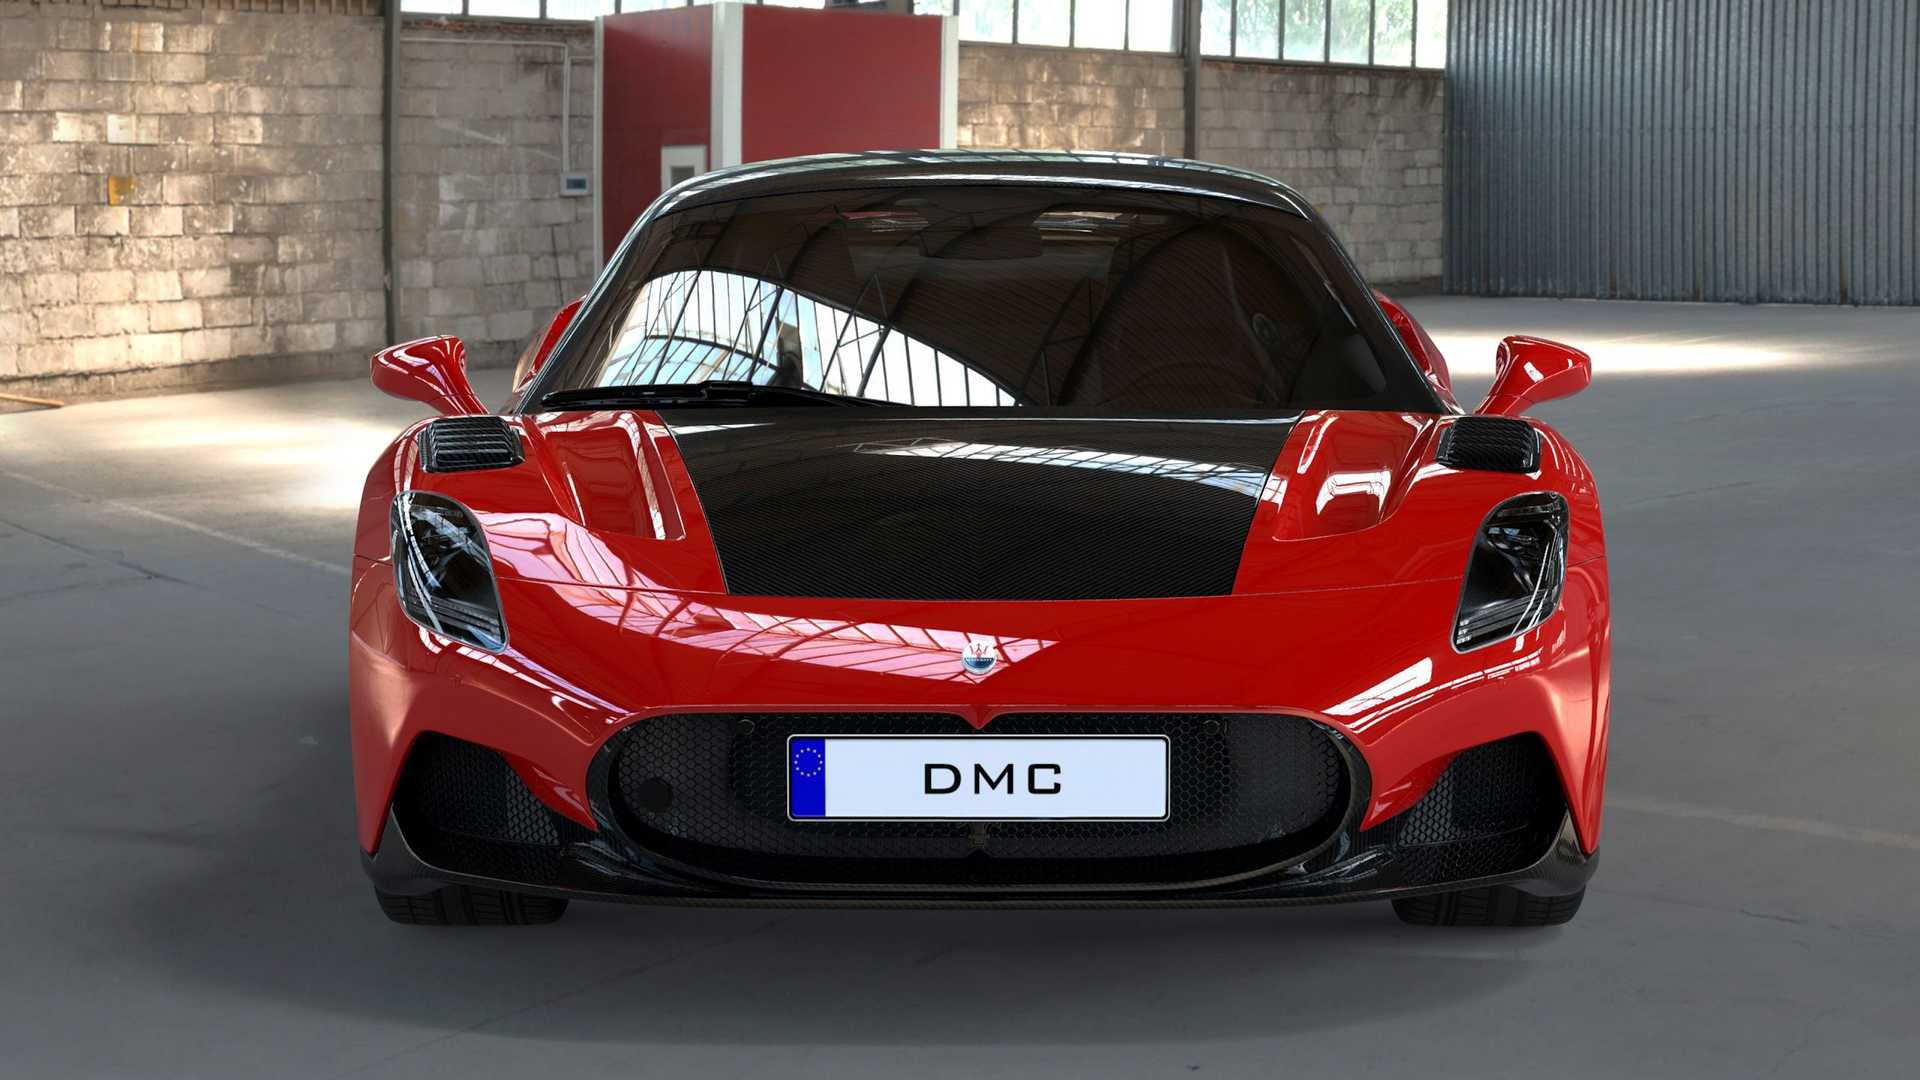 Maserati MC20 DMC frontal